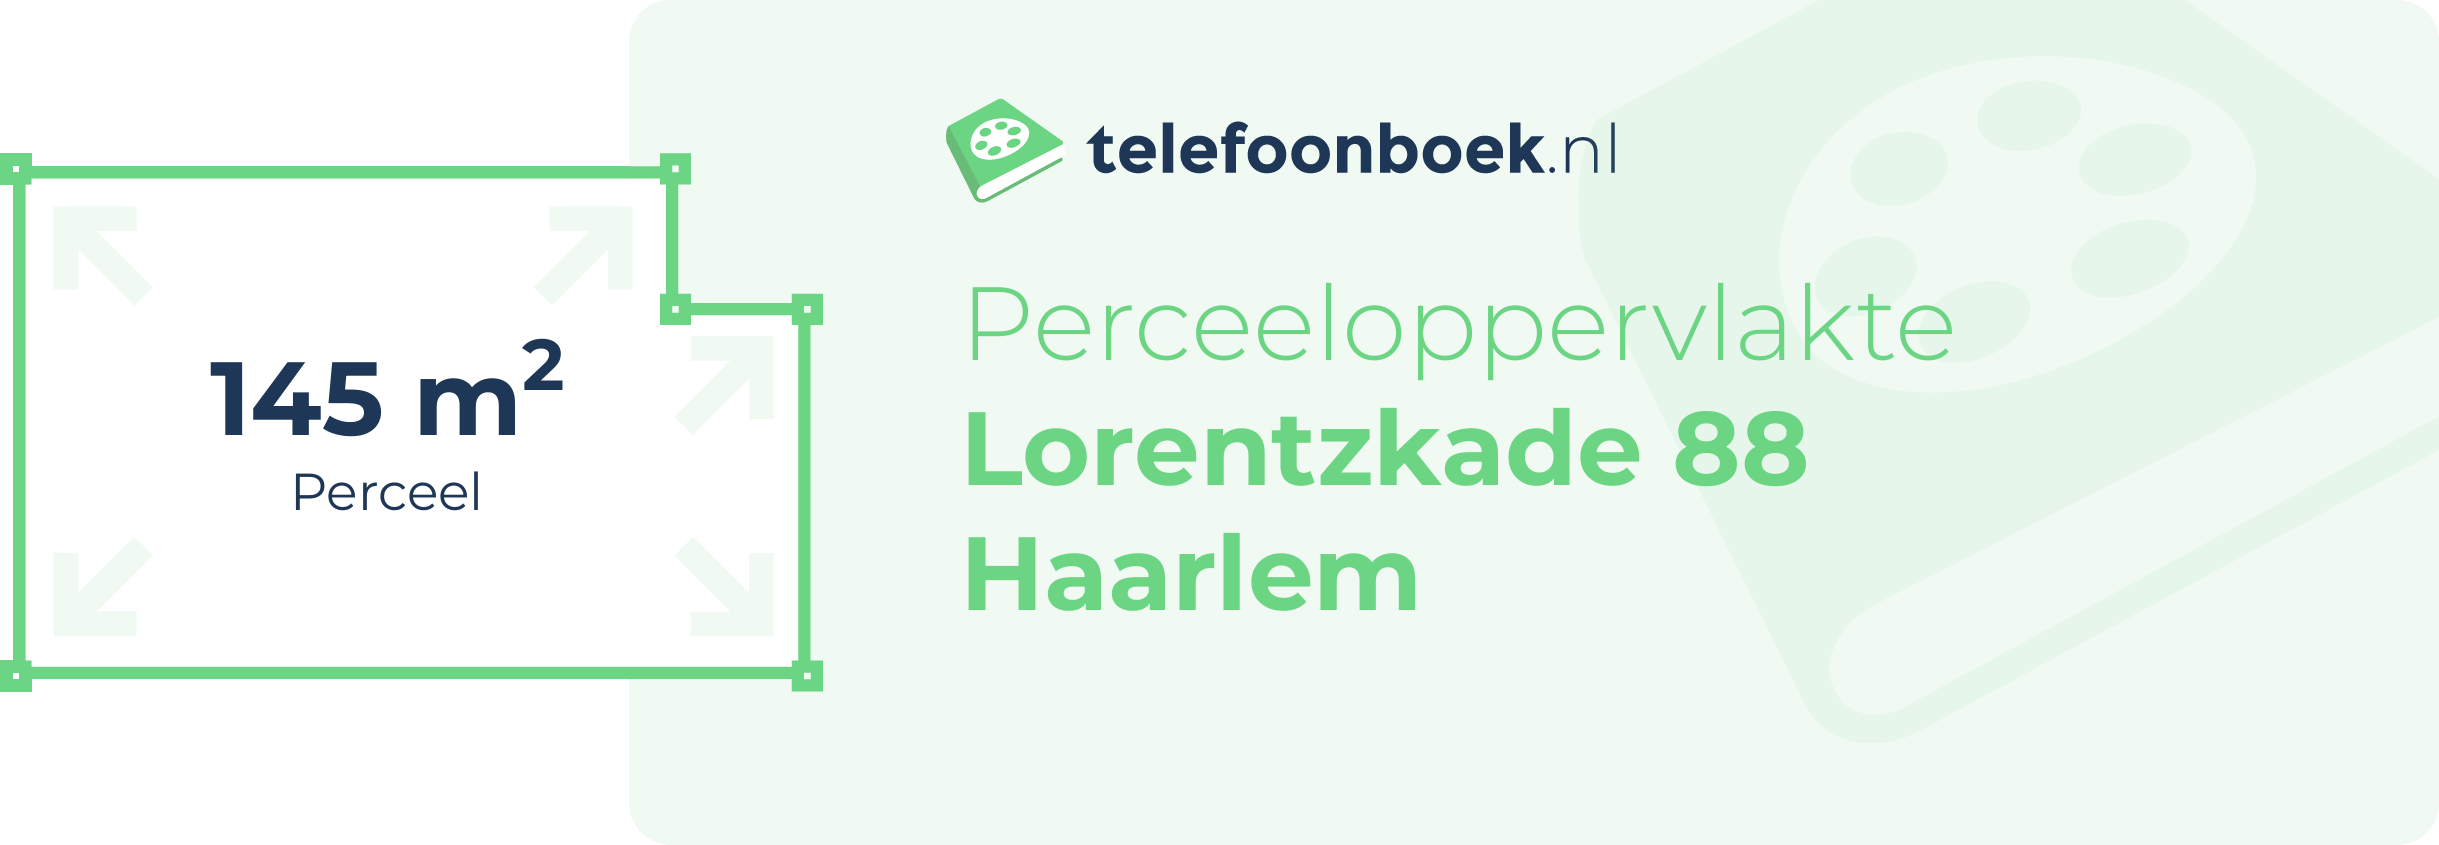 Perceeloppervlakte Lorentzkade 88 Haarlem